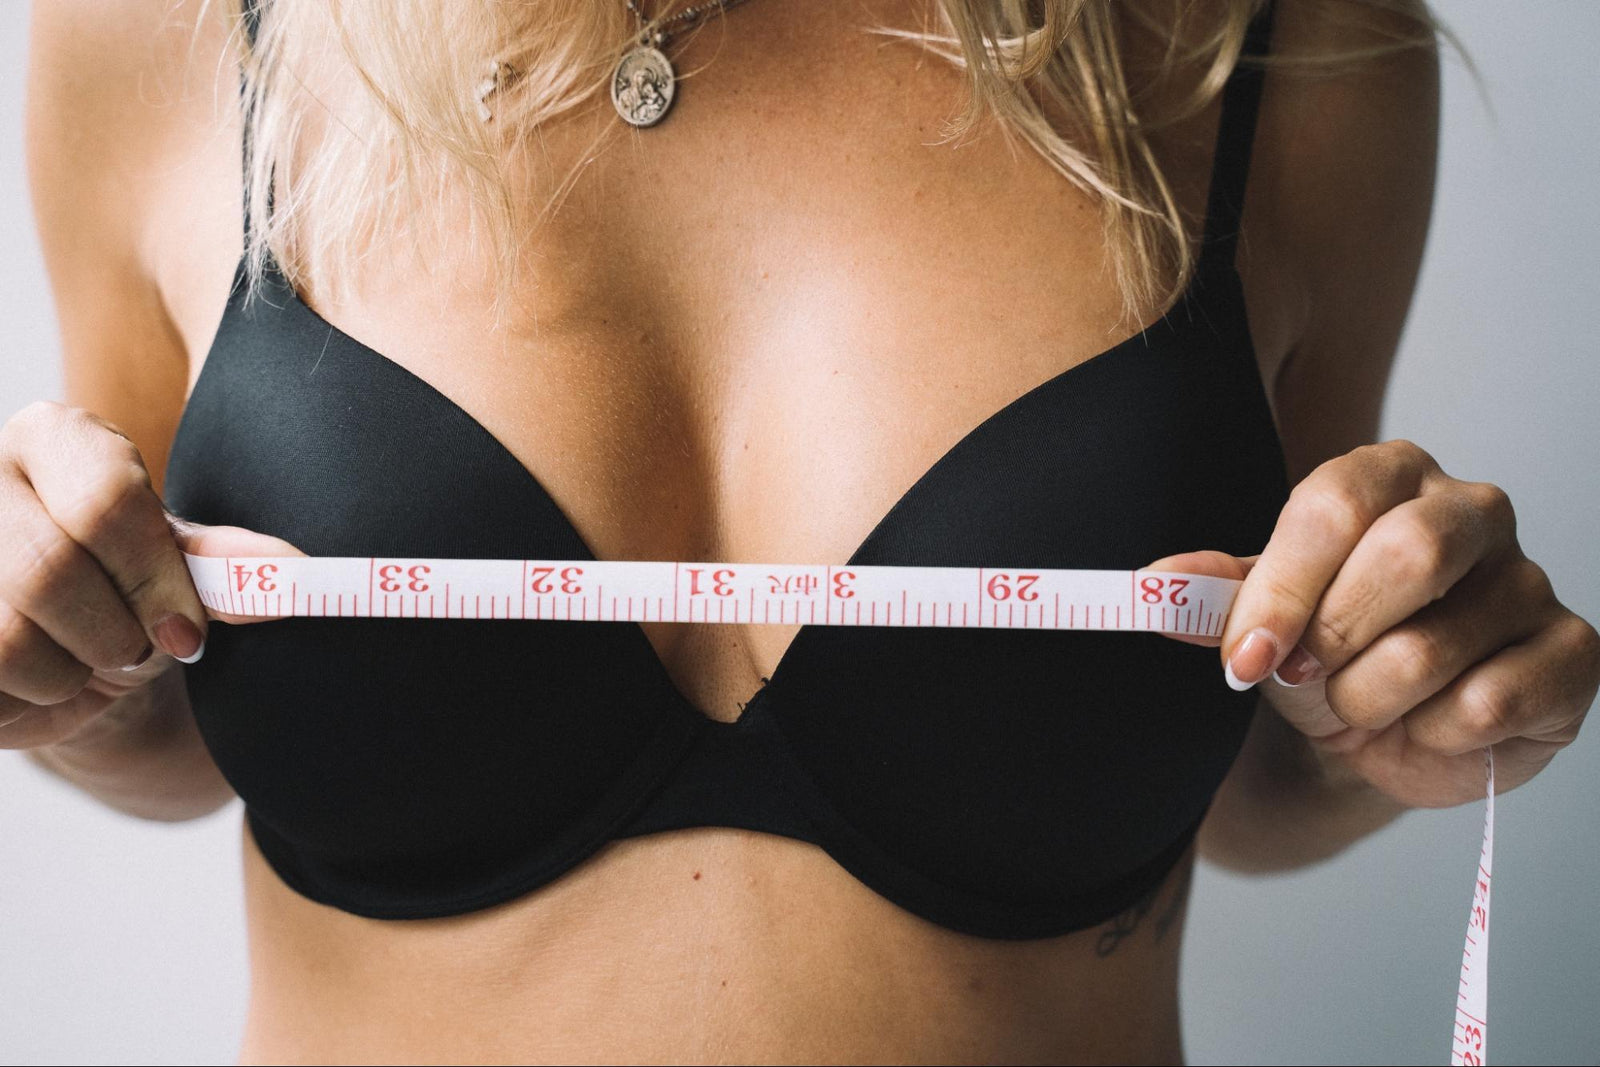 Bra Size Calculator: Important Factors To Measure A Bra Size